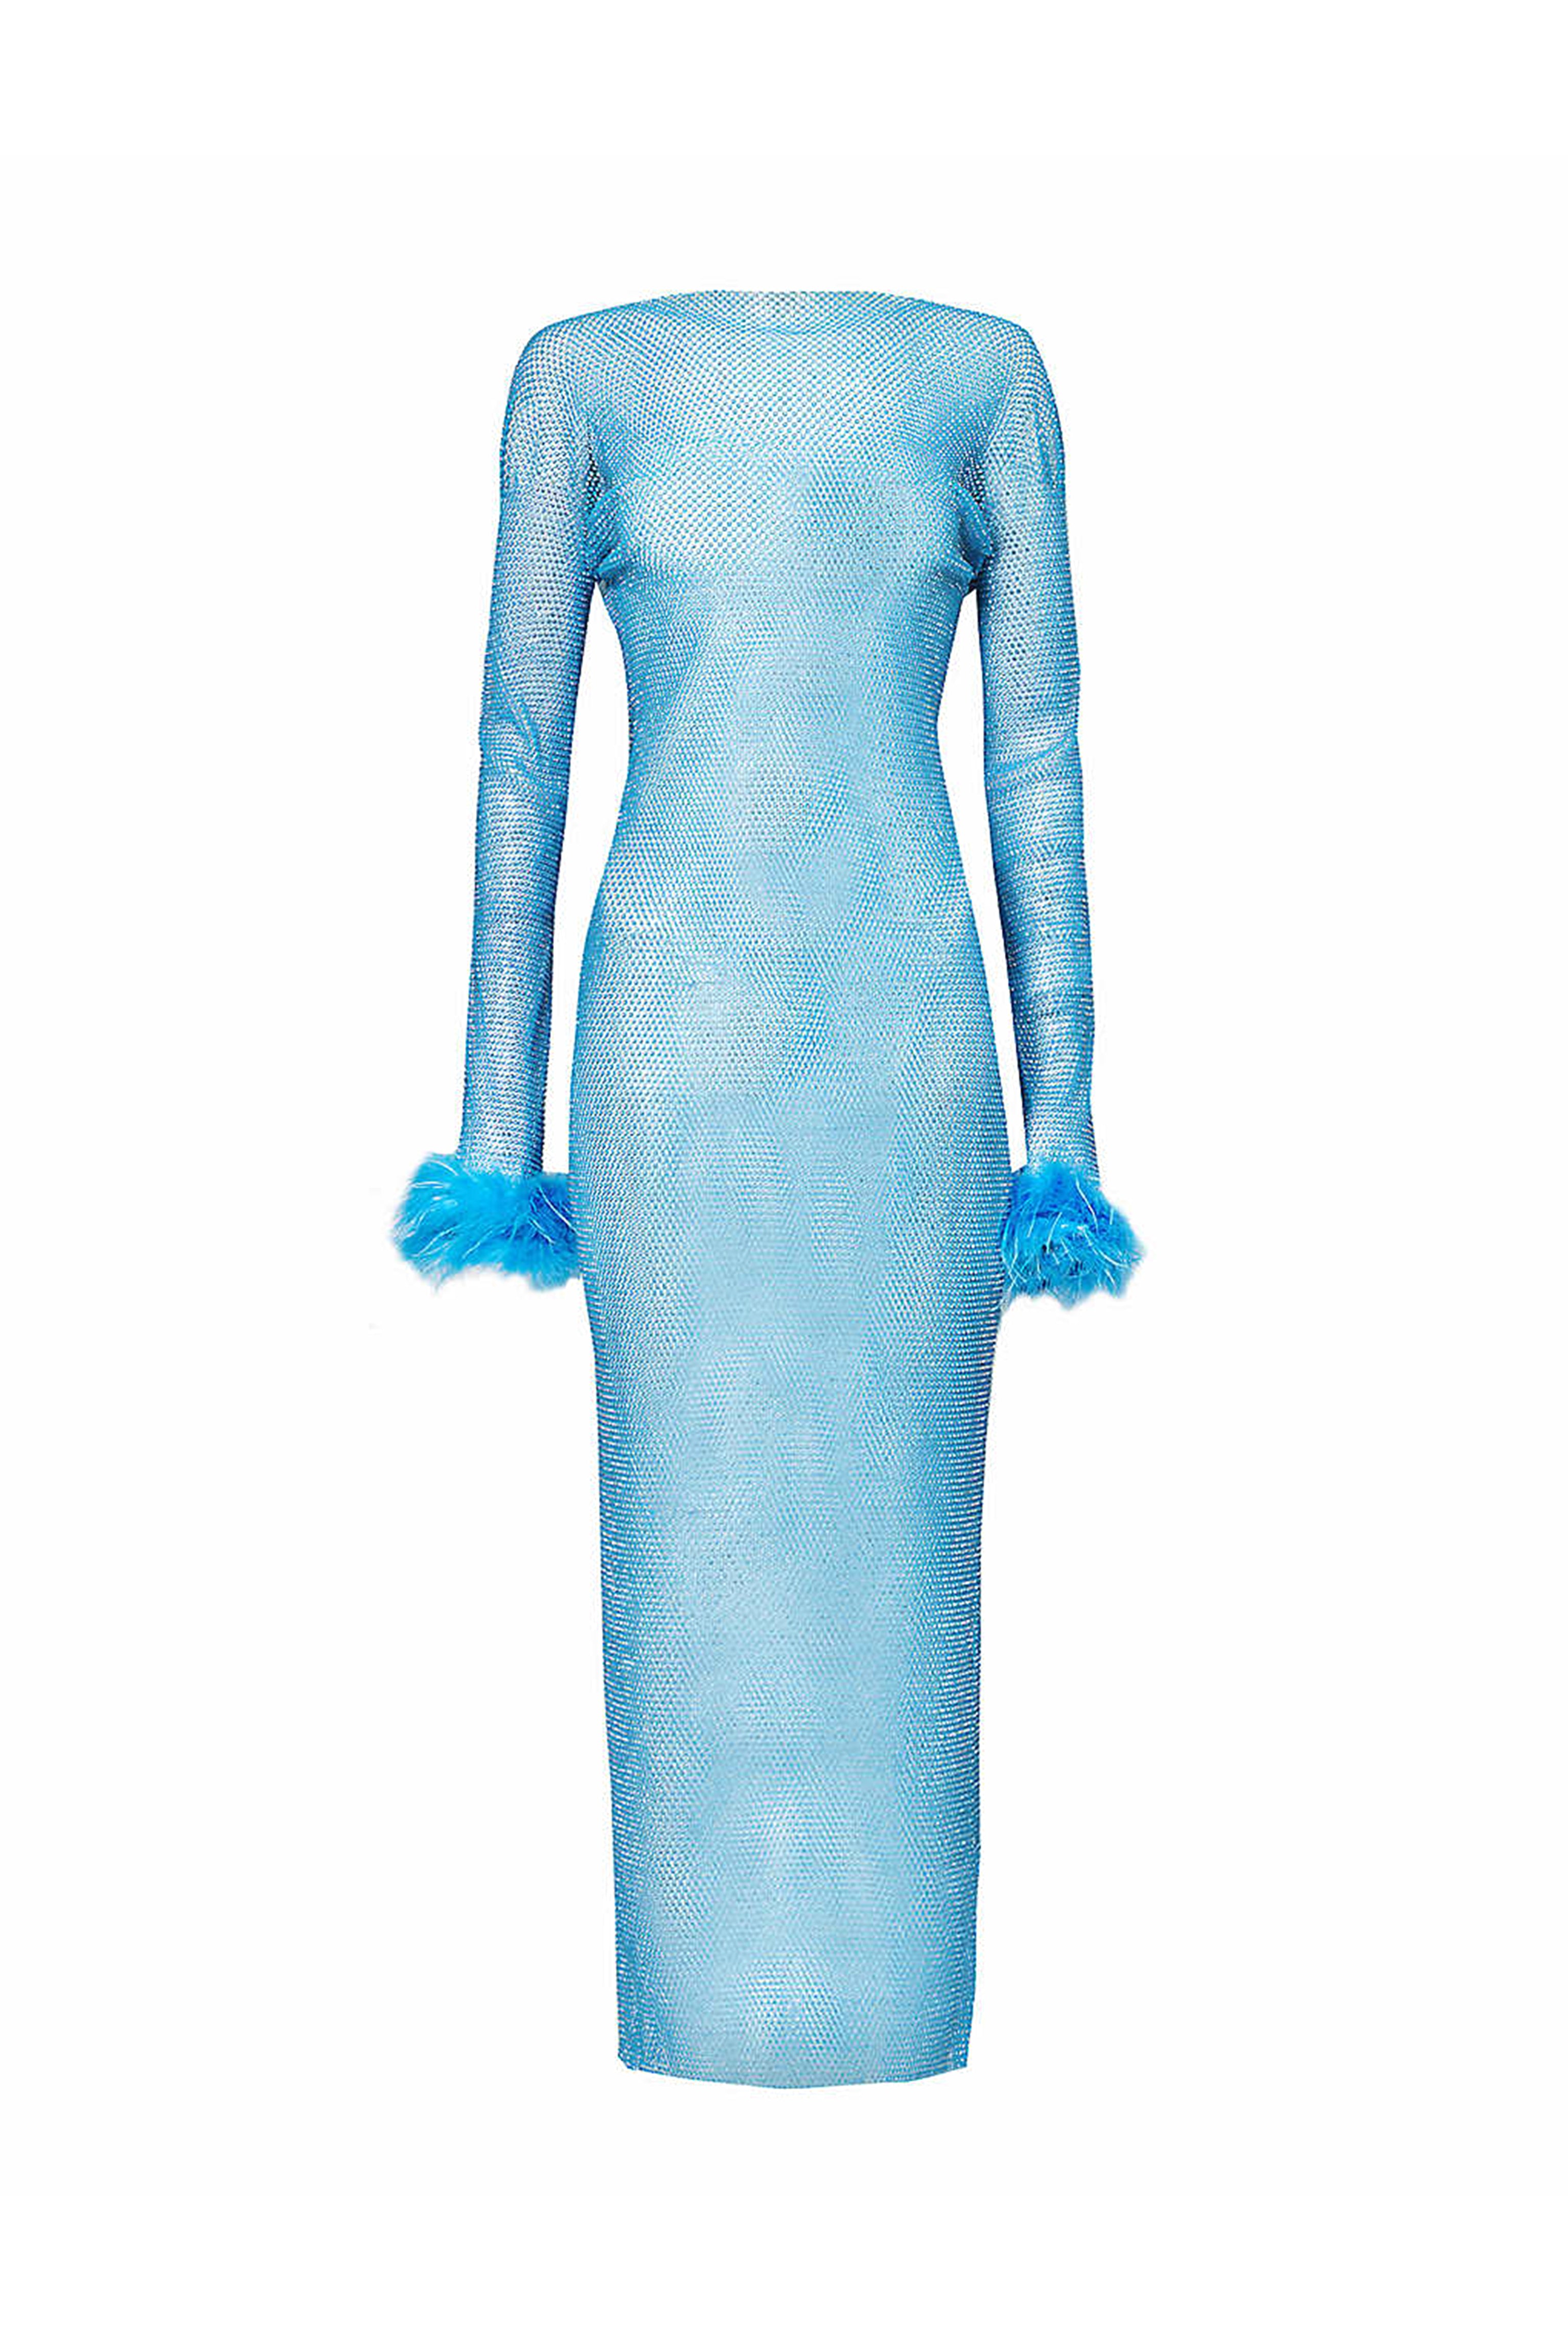 Amy Lynn Women's Seville Blue Net Mesh Rhinestone Maxi Dress